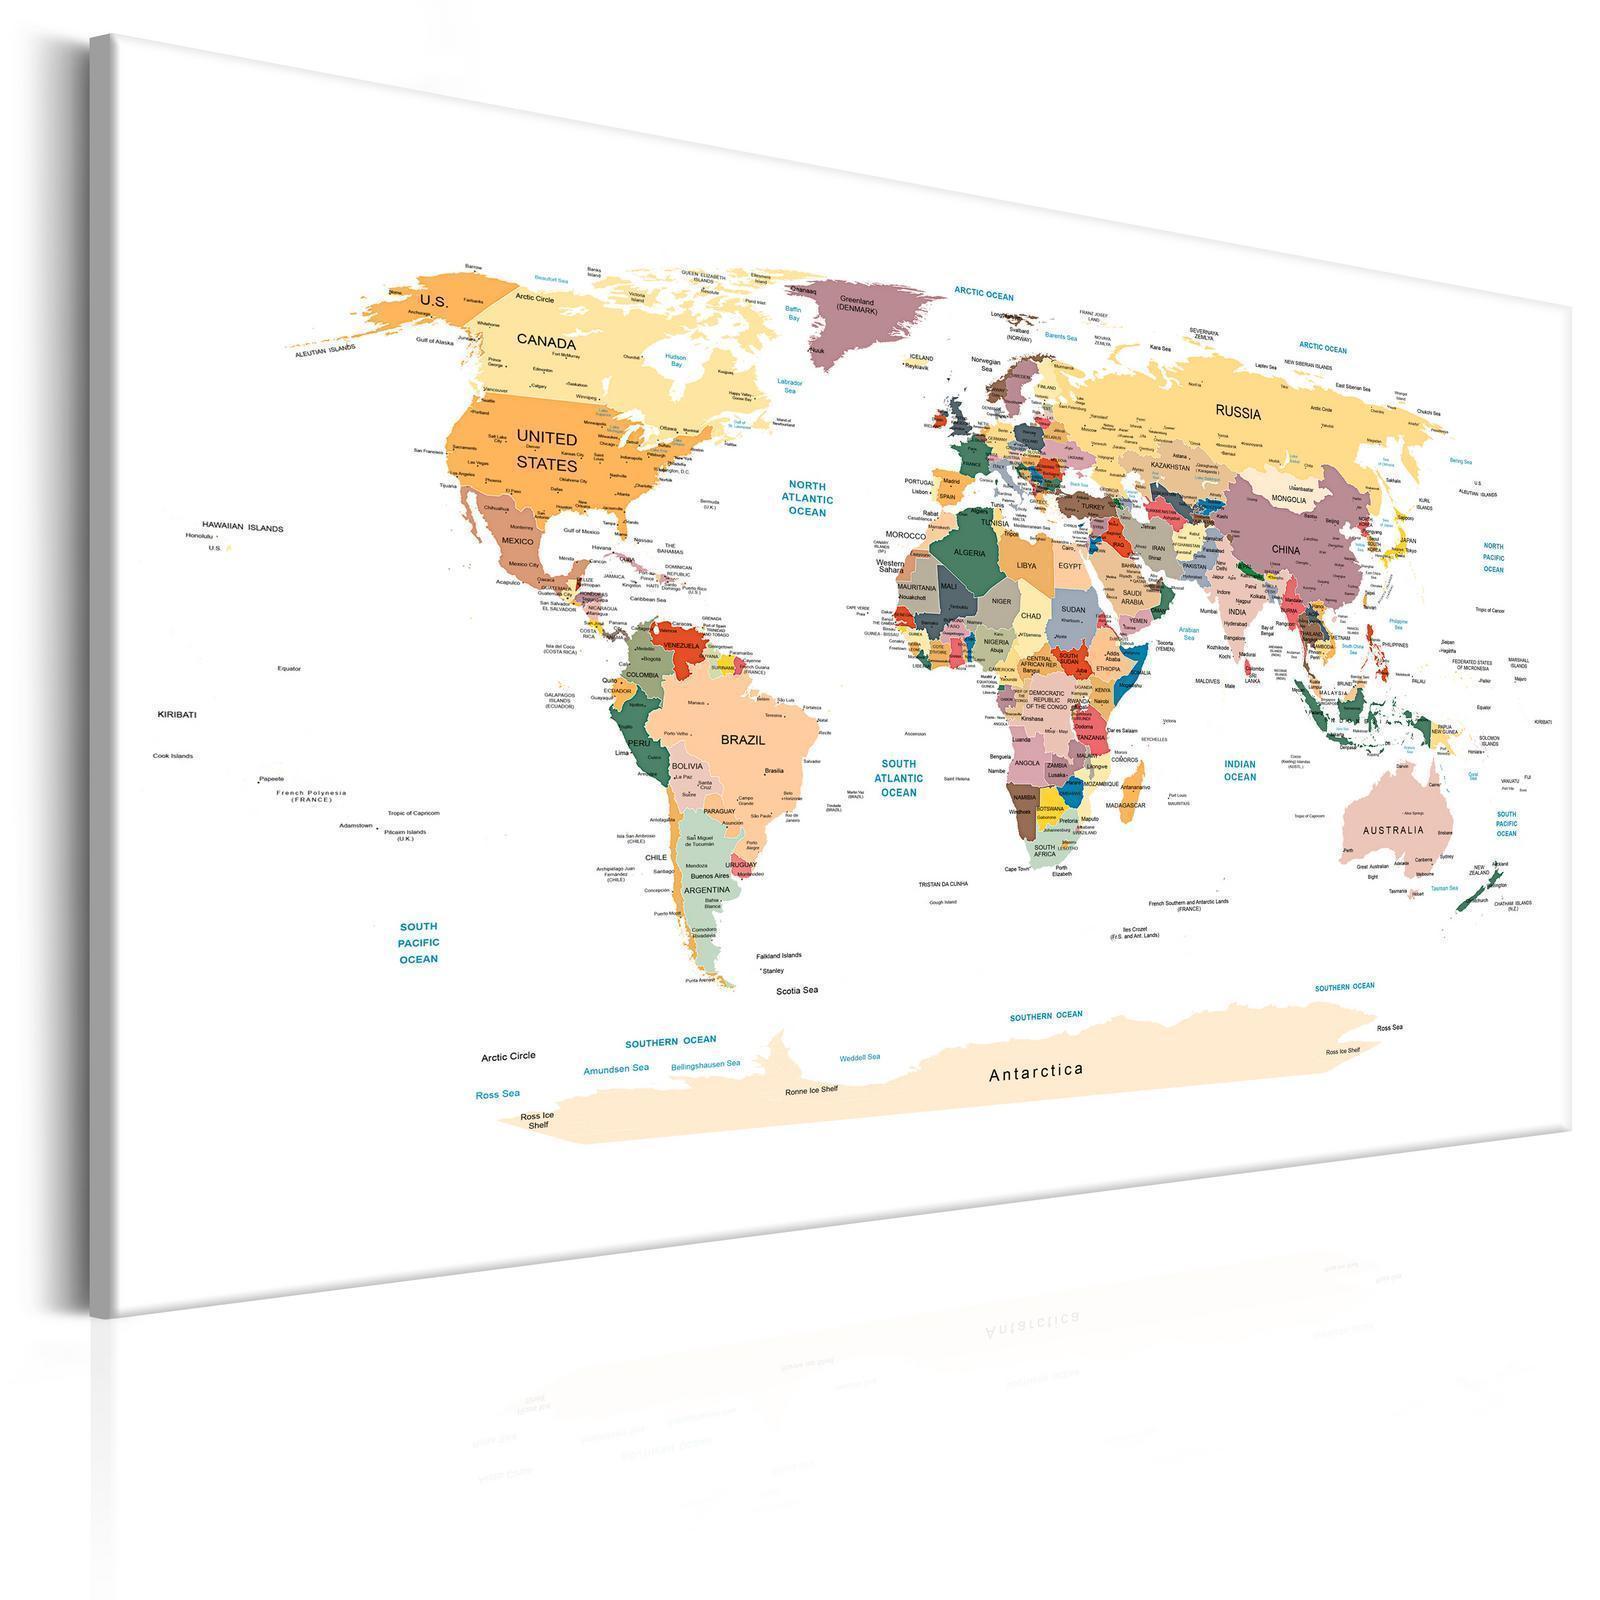 Tableau - World Map: Travel Around the World